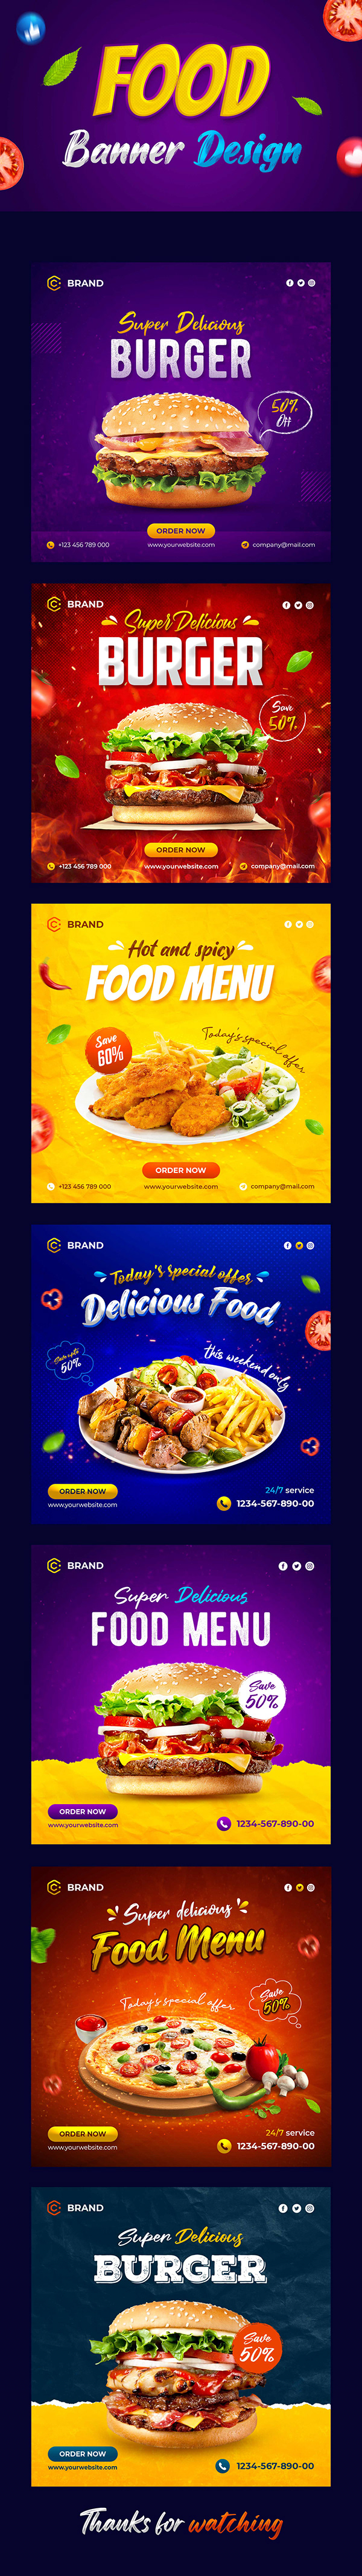 Social Media Food Banner Design